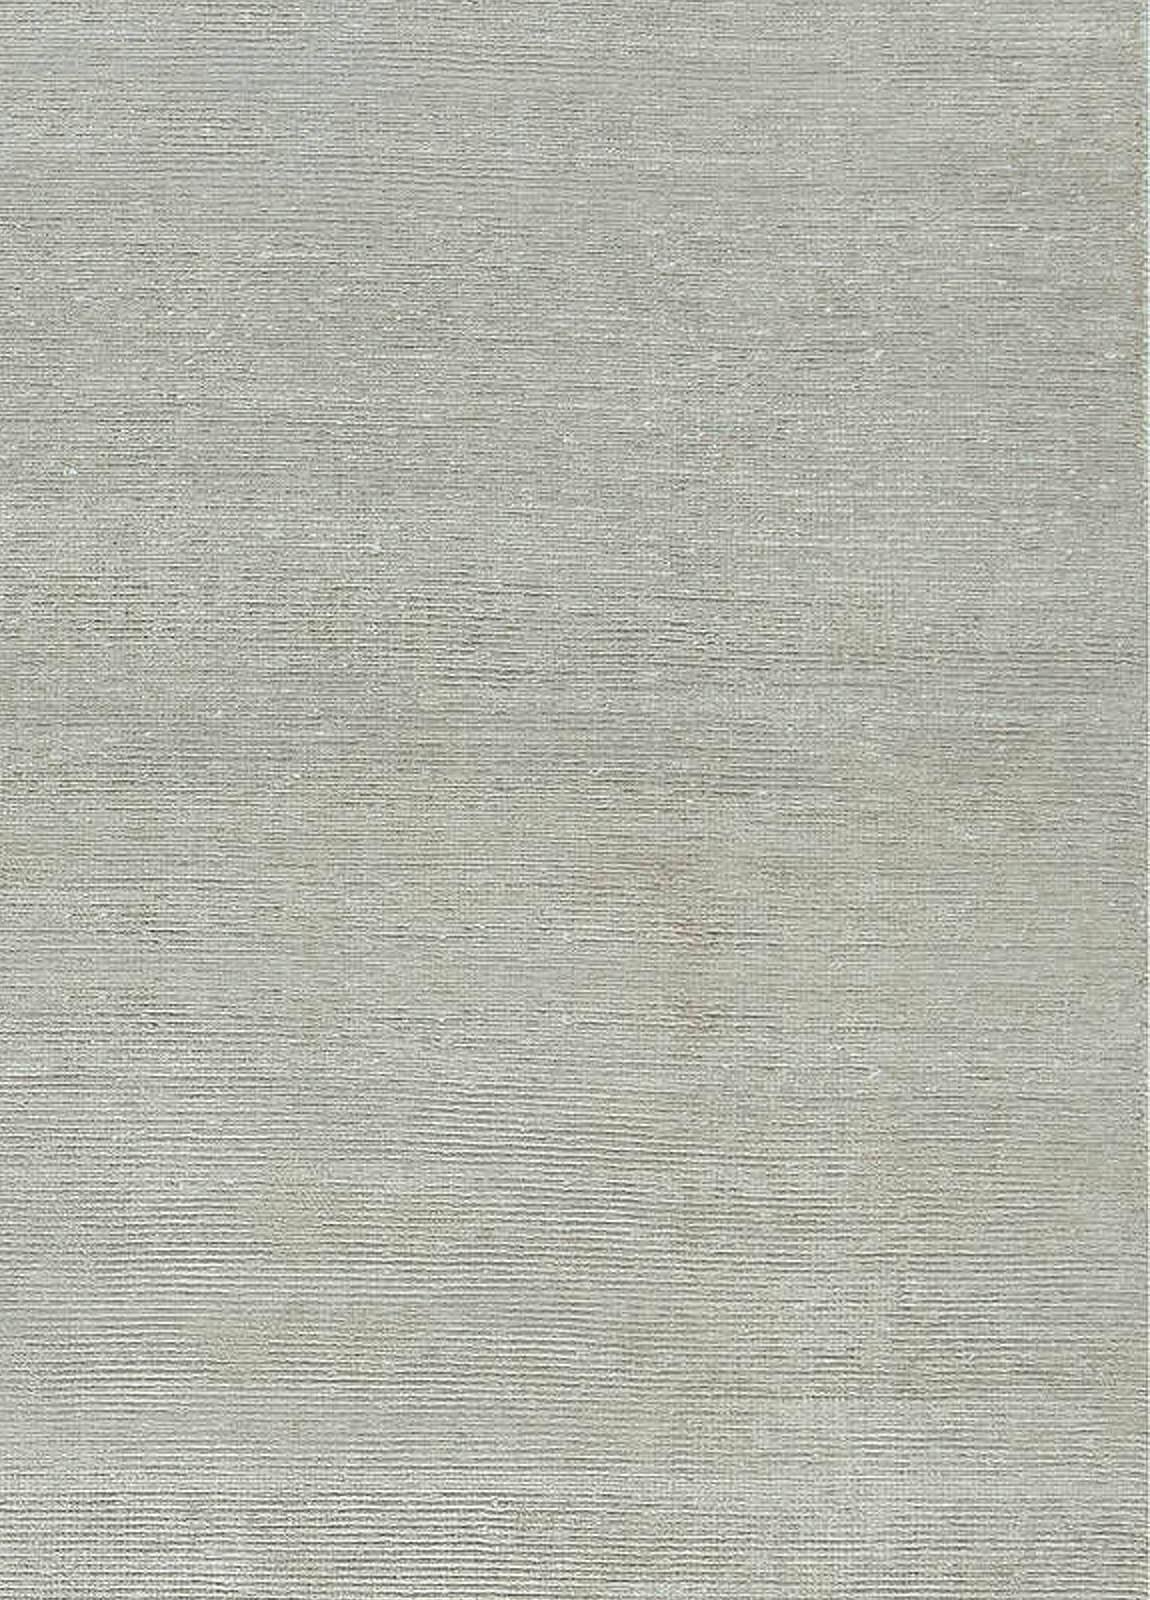 Contemporary solid beige handmade silk and wool rug by Doris Leslie Blau
Size: 9'5